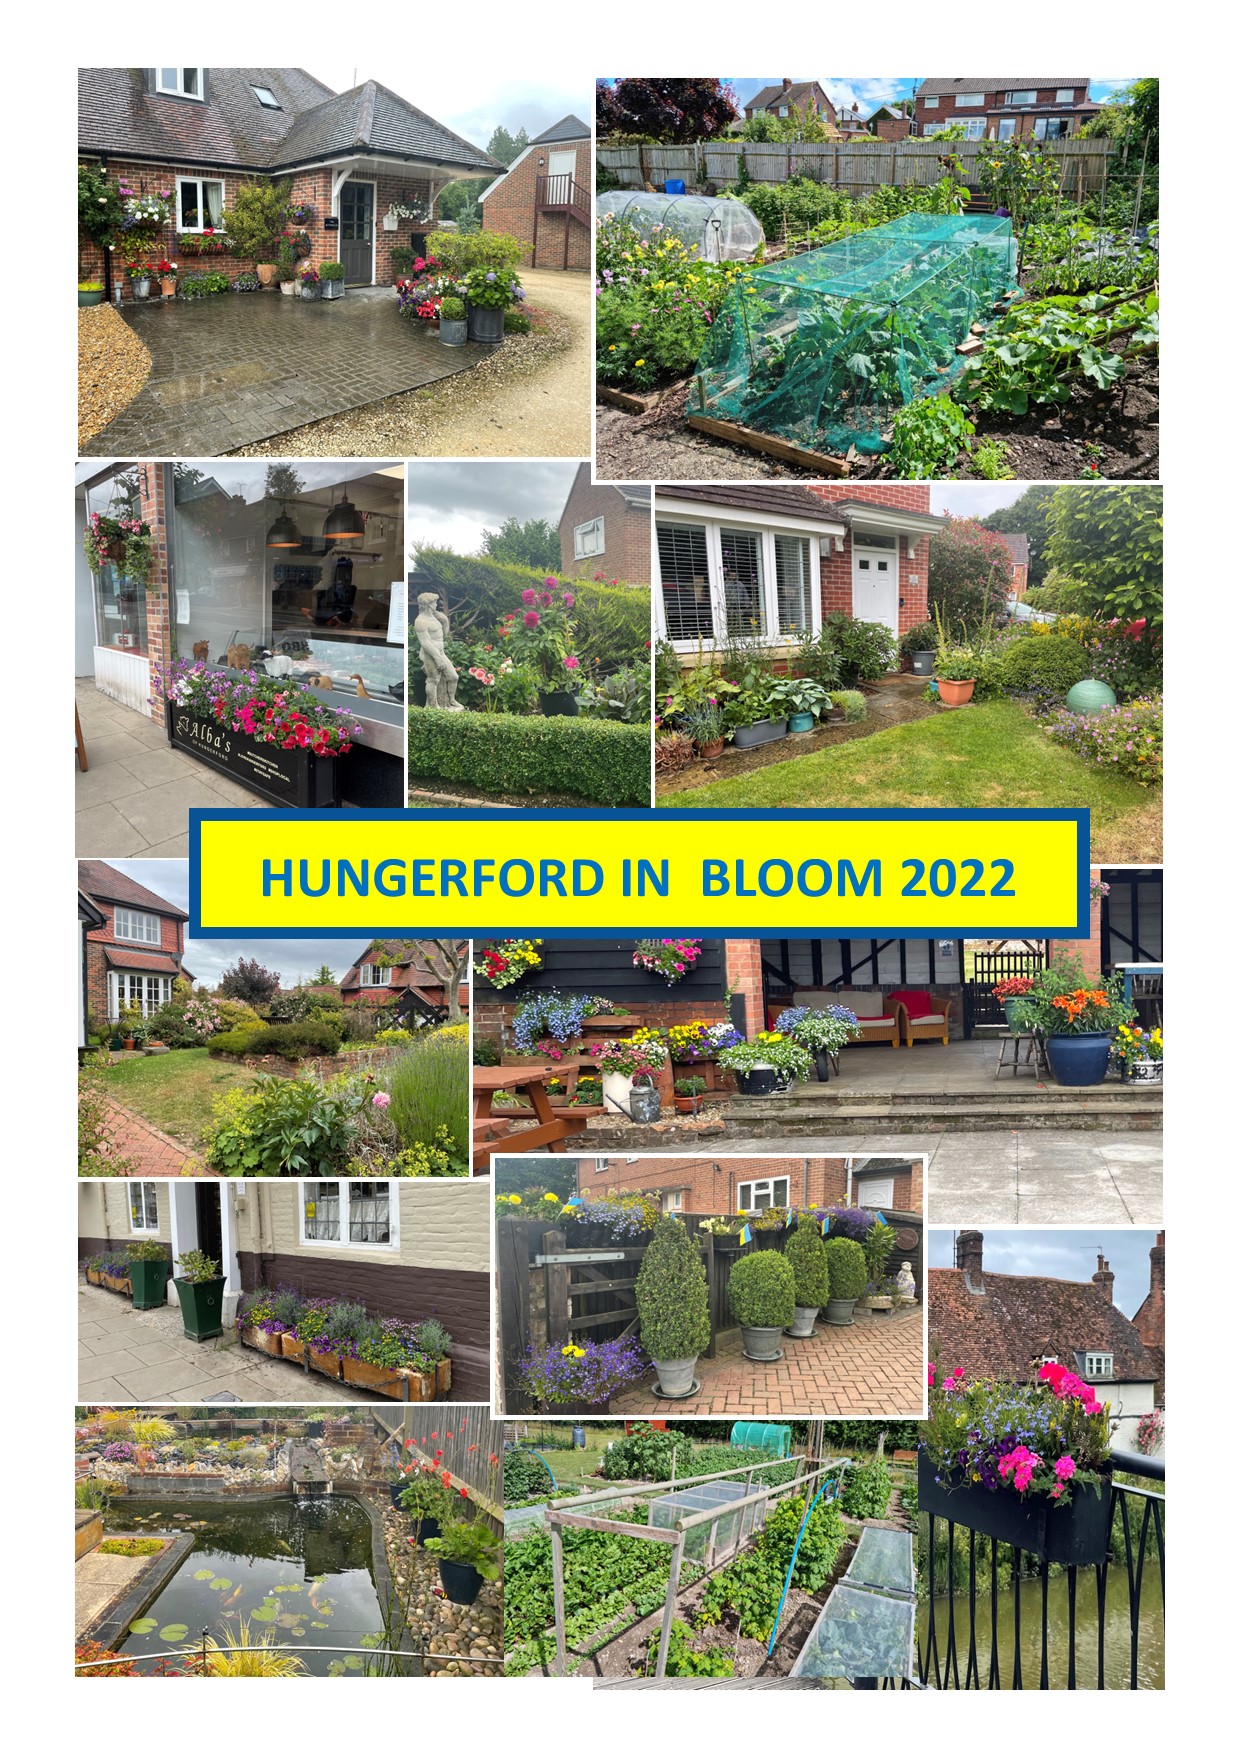 Hungerford in Bloom 2022 website poster